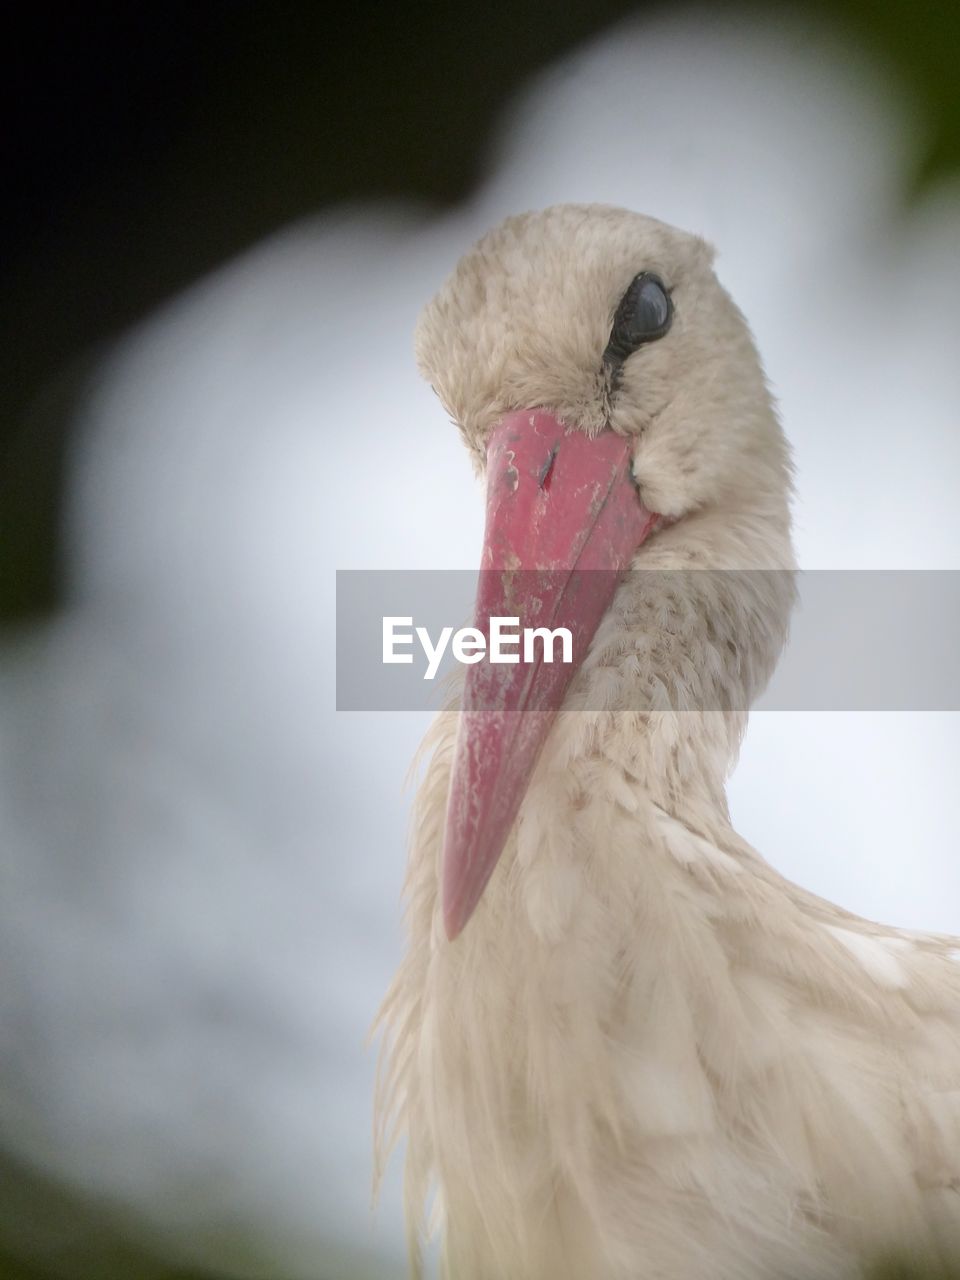 A close-up shot of a beautiful stork